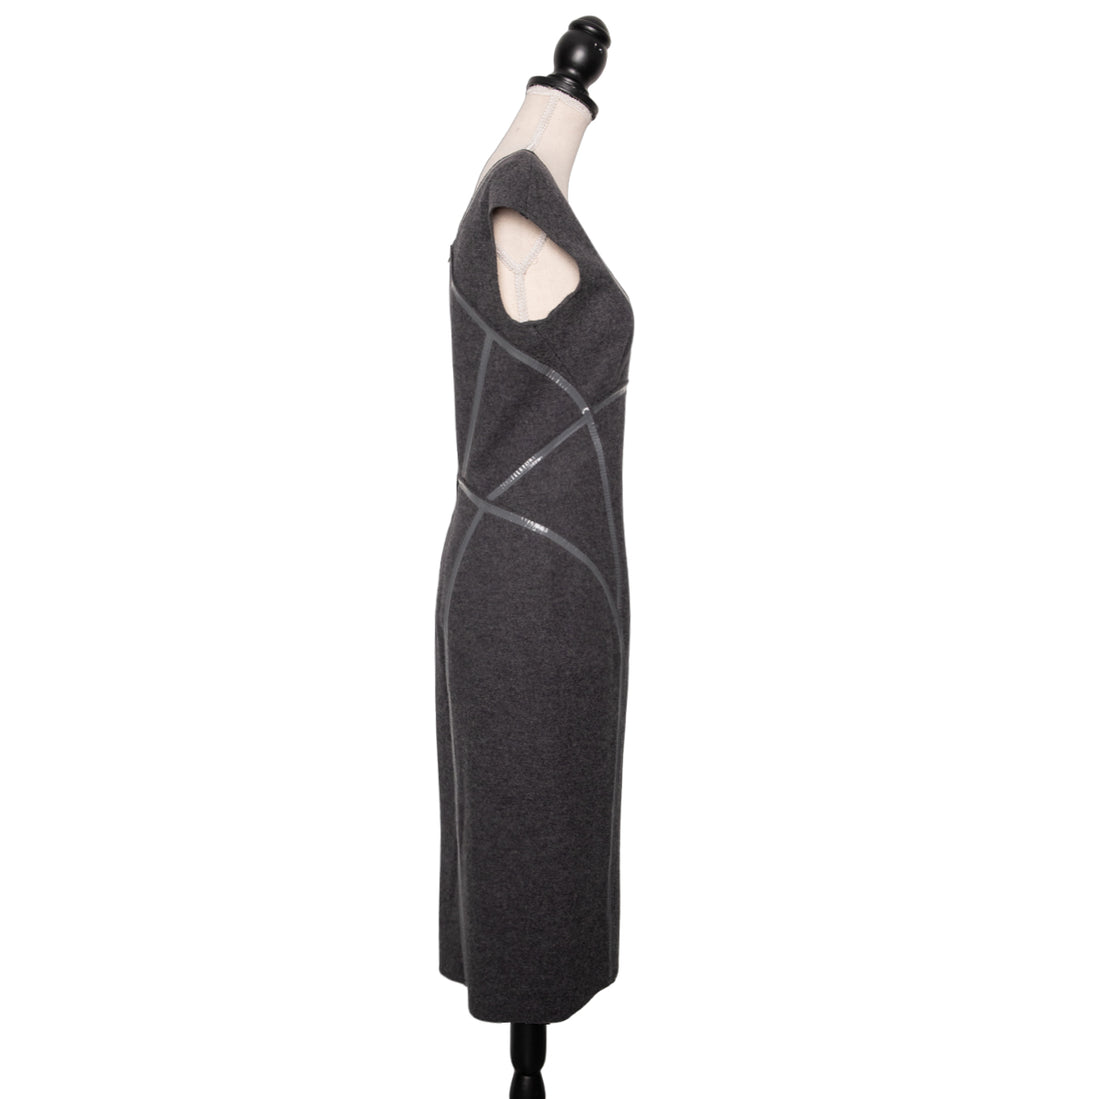 Prada sheath dress with patent details